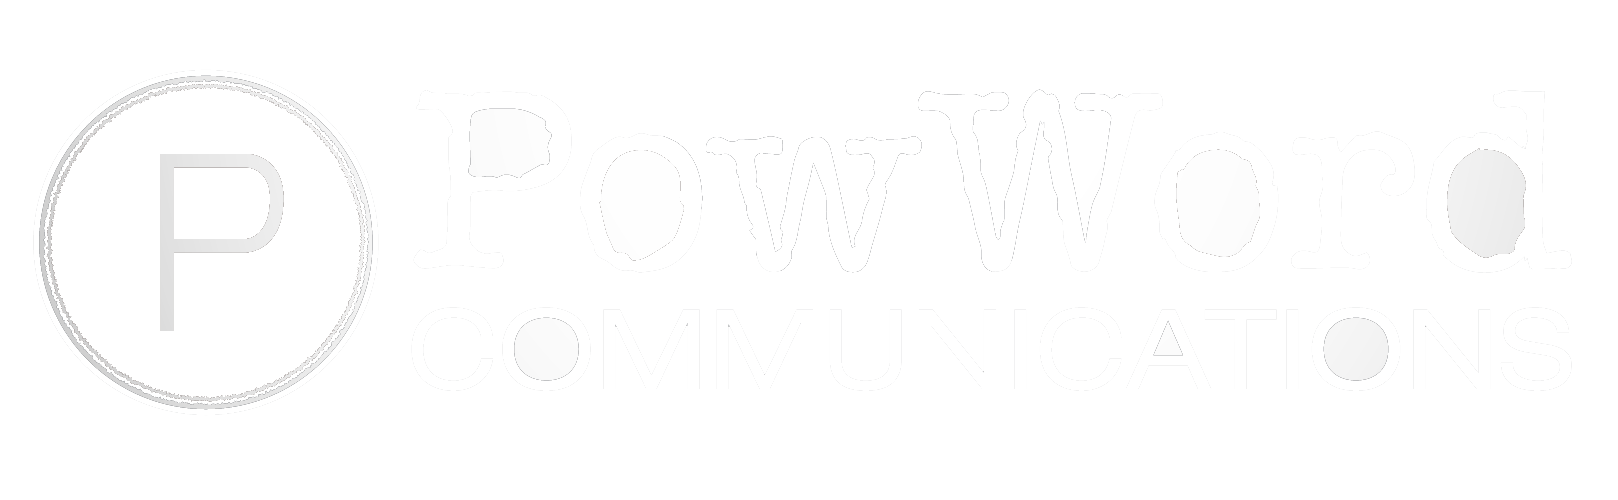 PowWord Communications